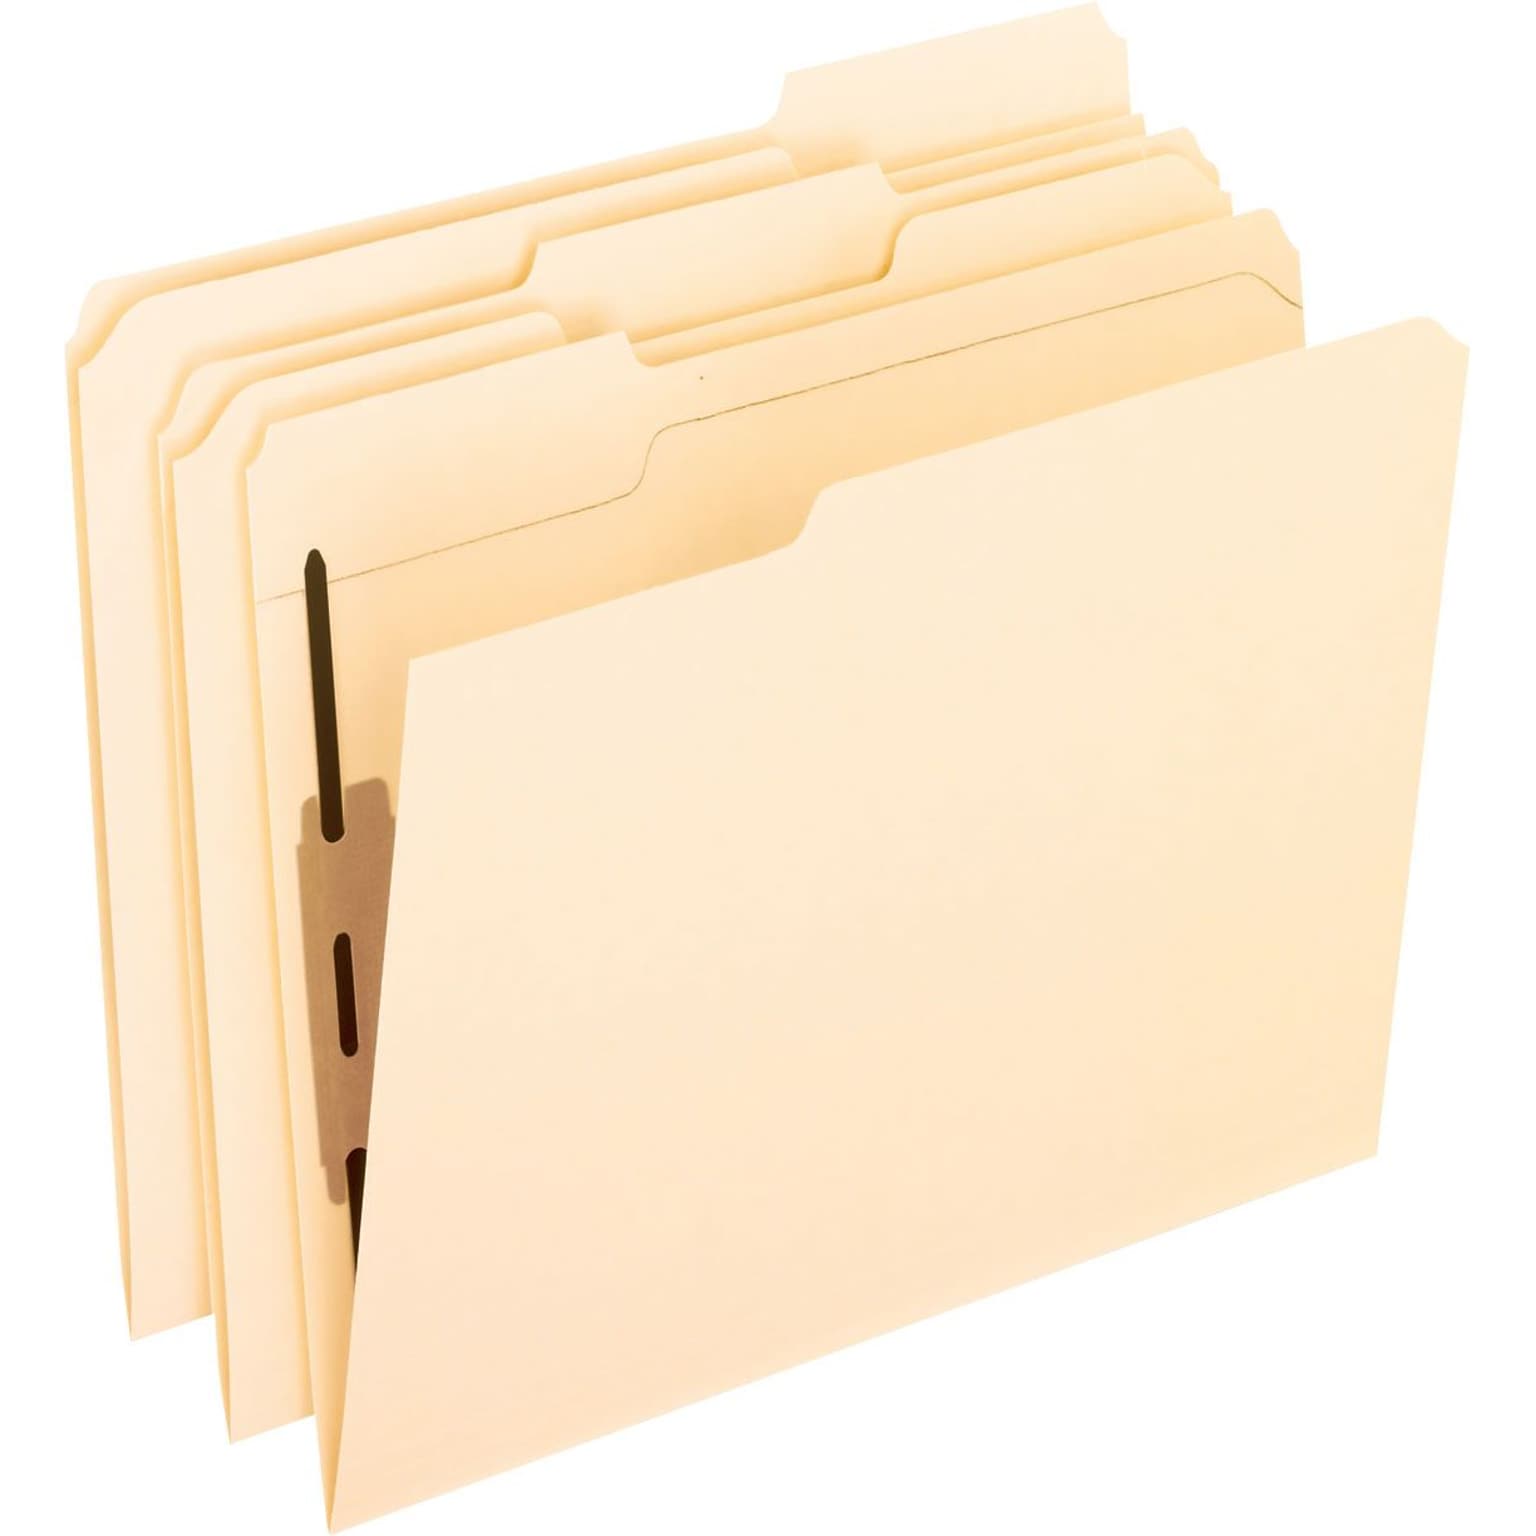 Pendaflex Recycled Classification Folder, Letter Size, Manila, 50/Box (PFX M13U1)